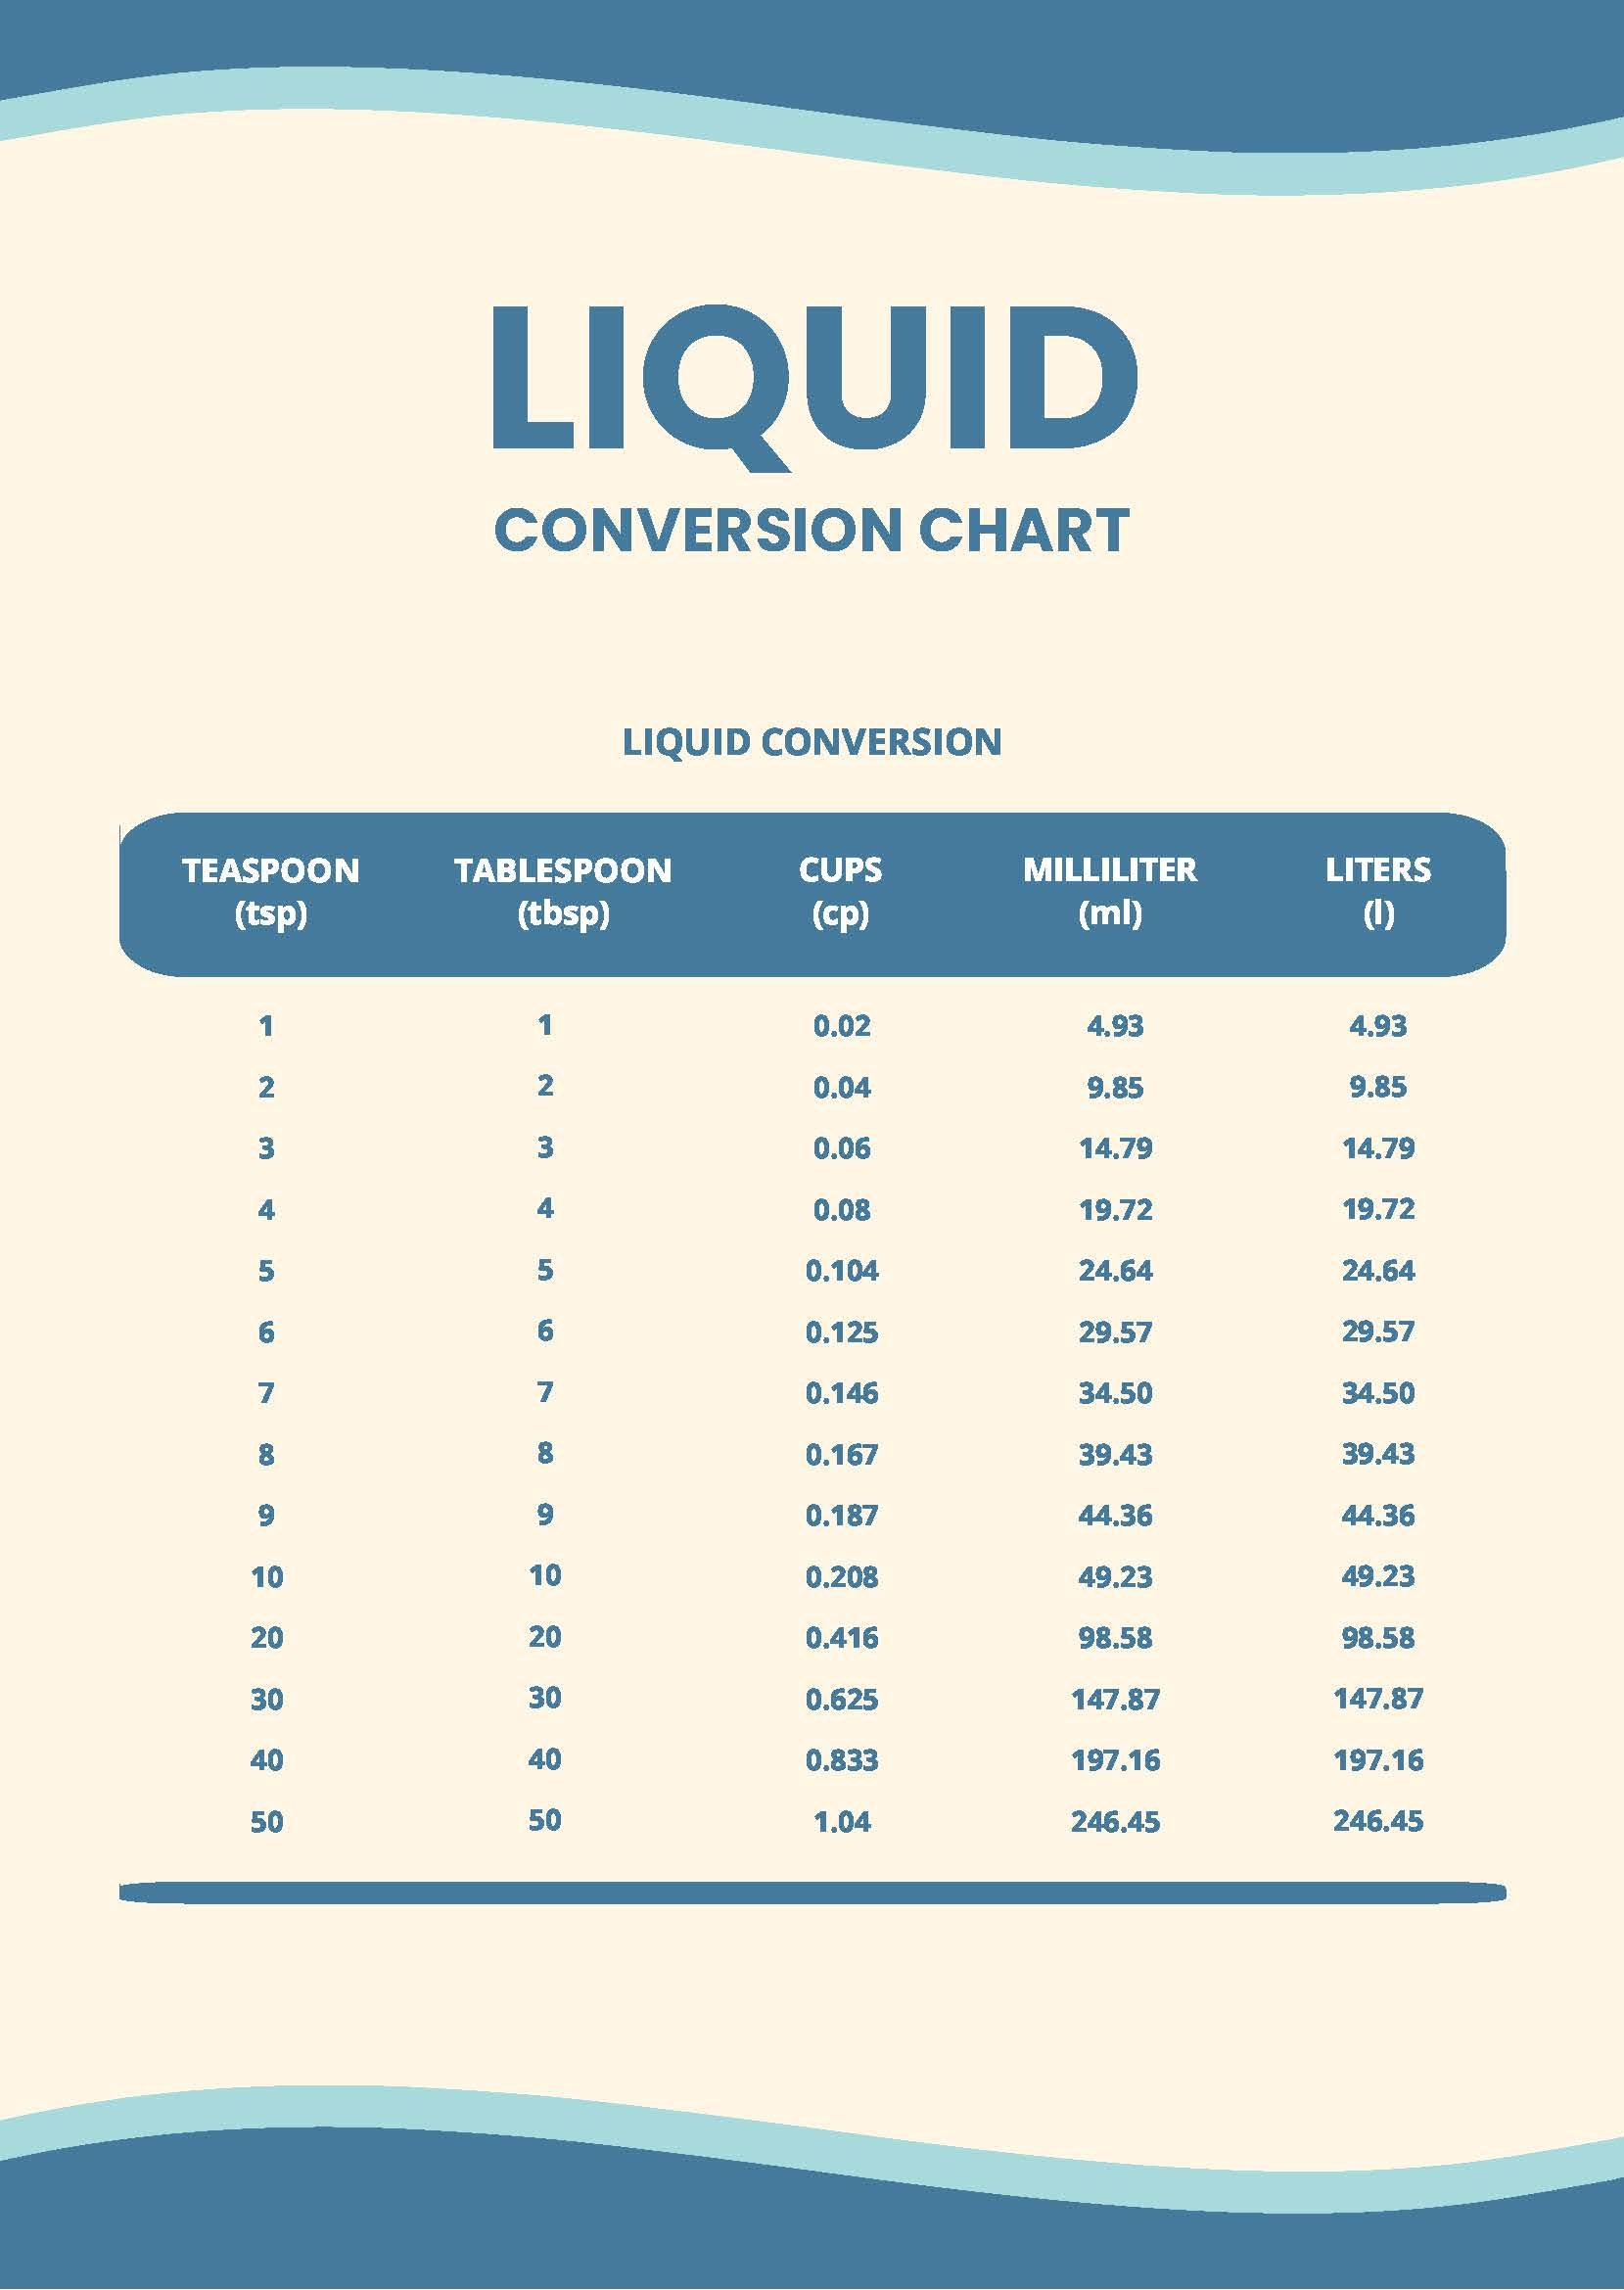 Liquid Conversion Chart in PDF - Download | Template.net